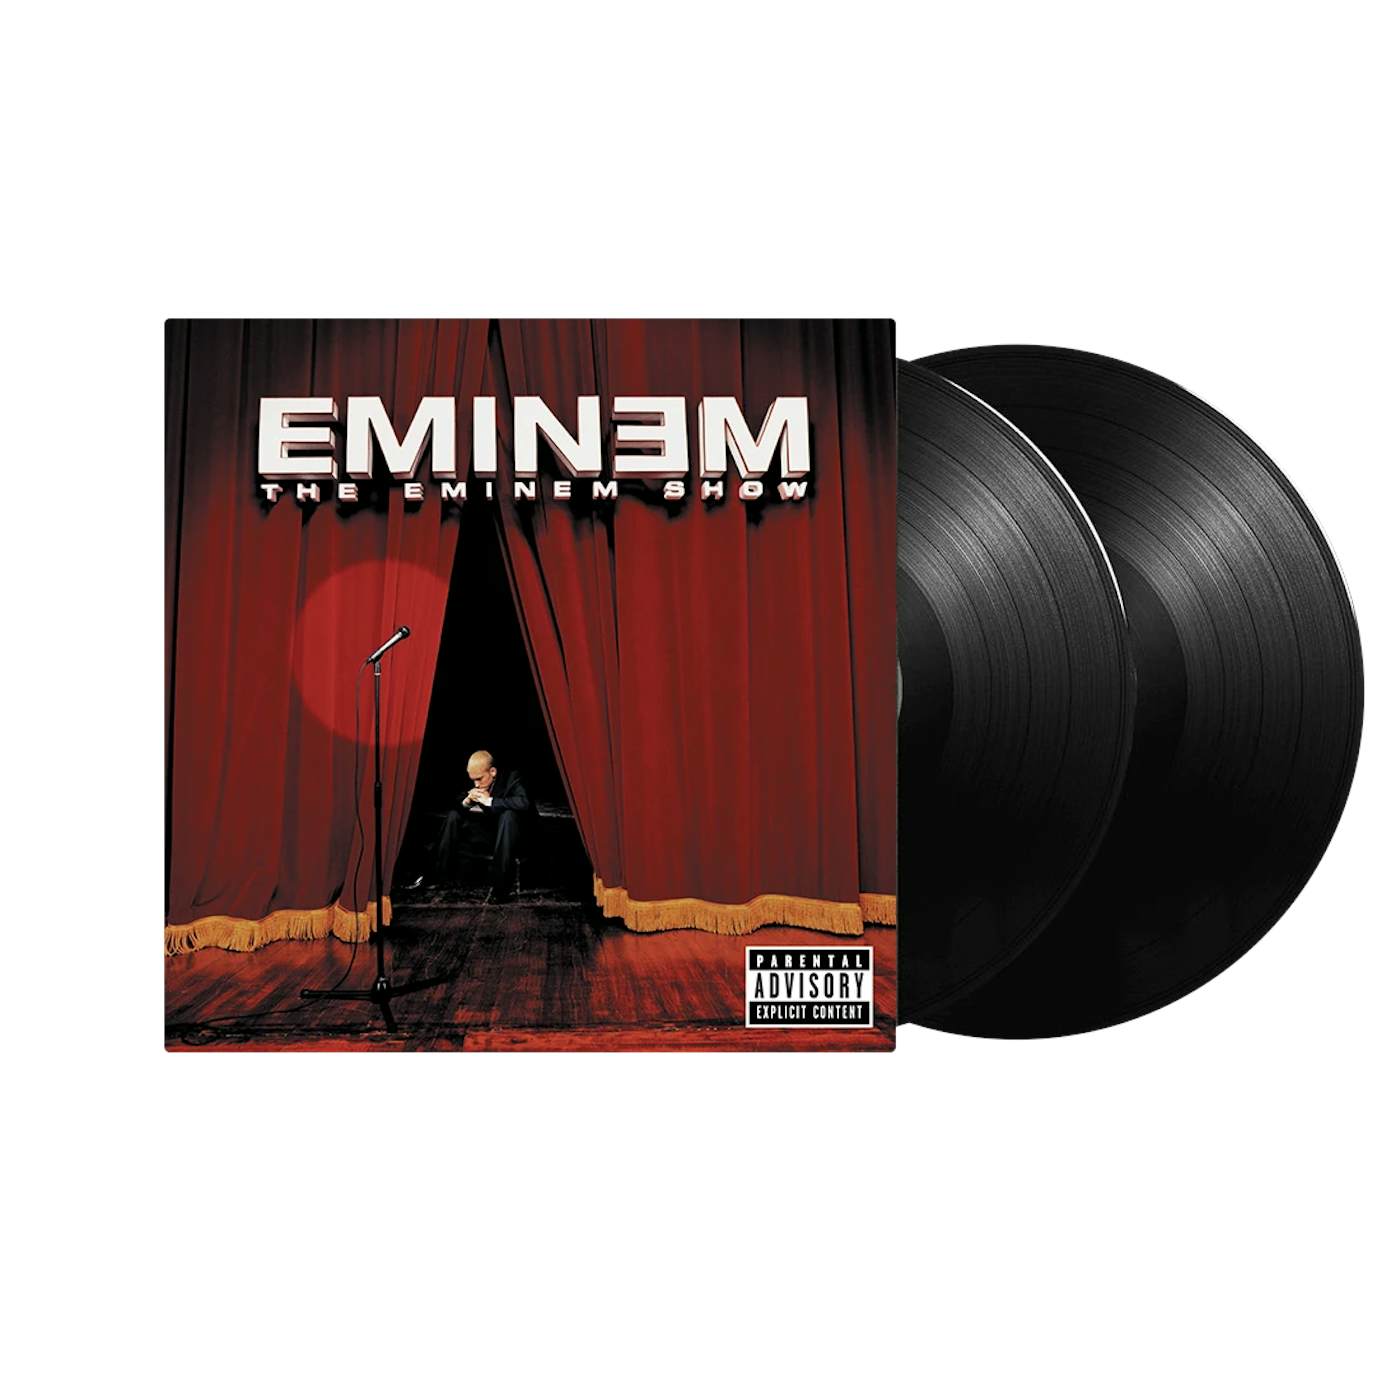 Eminem RECOVERY Vinyl 2 LP Record Album-Rihanna And More VG+